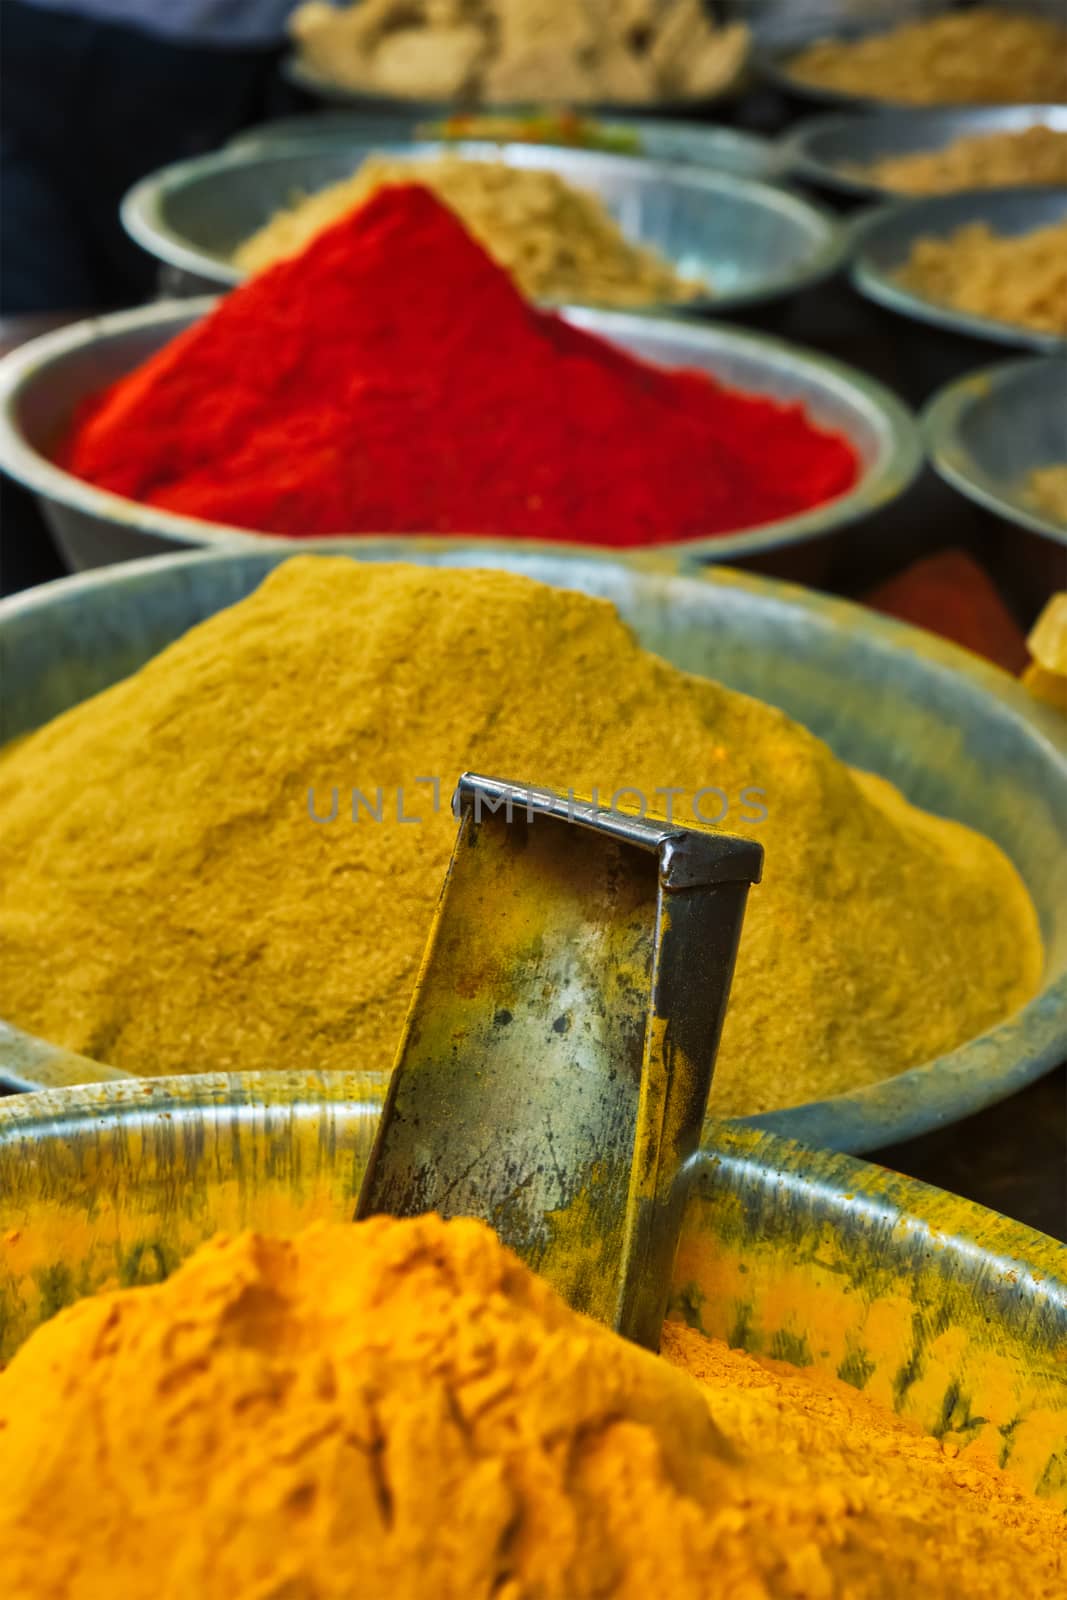 Turmeric curcuma powder and chili powder in spices market in India by dimol